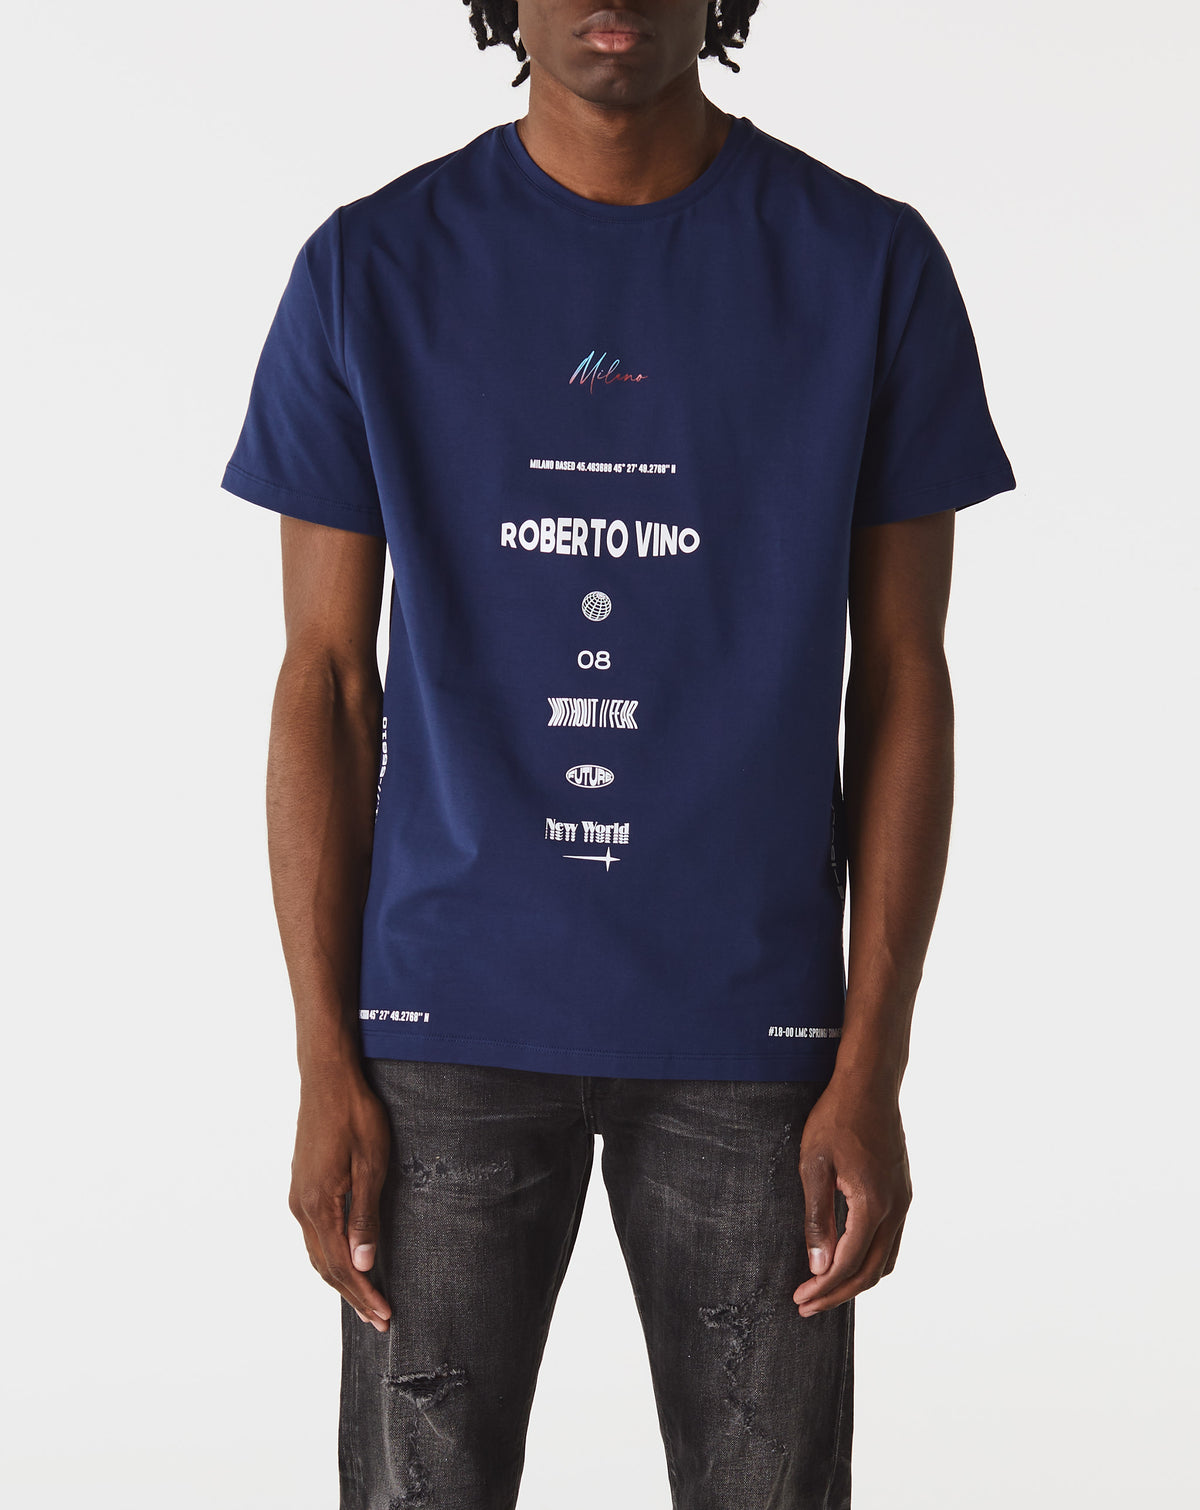 Roberto Vino Milano Future T-Shirt - Rule of Next Apparel